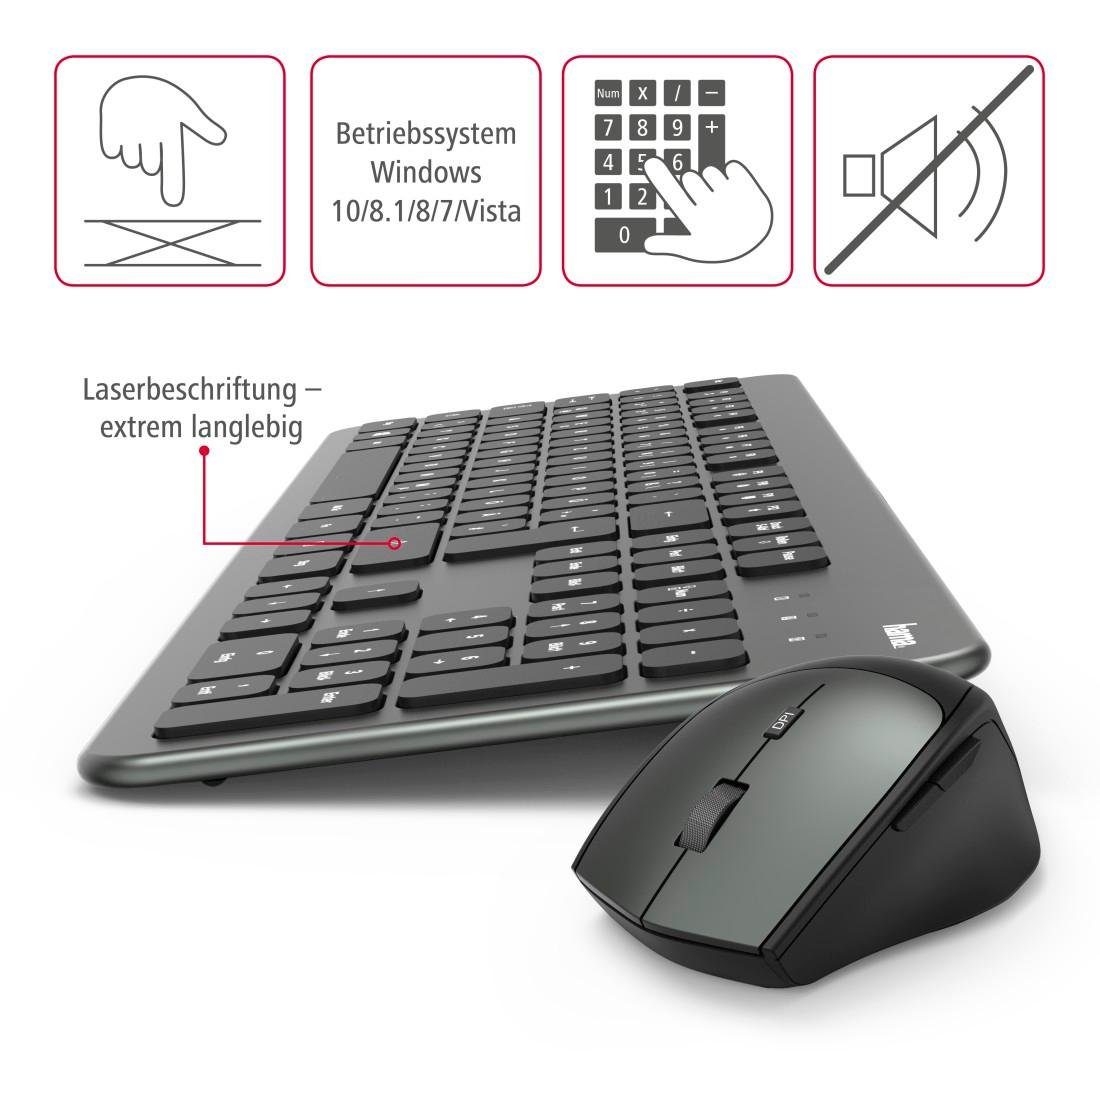 "KMW-700" schwarz Tastatur- Maus-Set Funktastatur-/Maus-Set Tastatur/Maus-Set Hama und